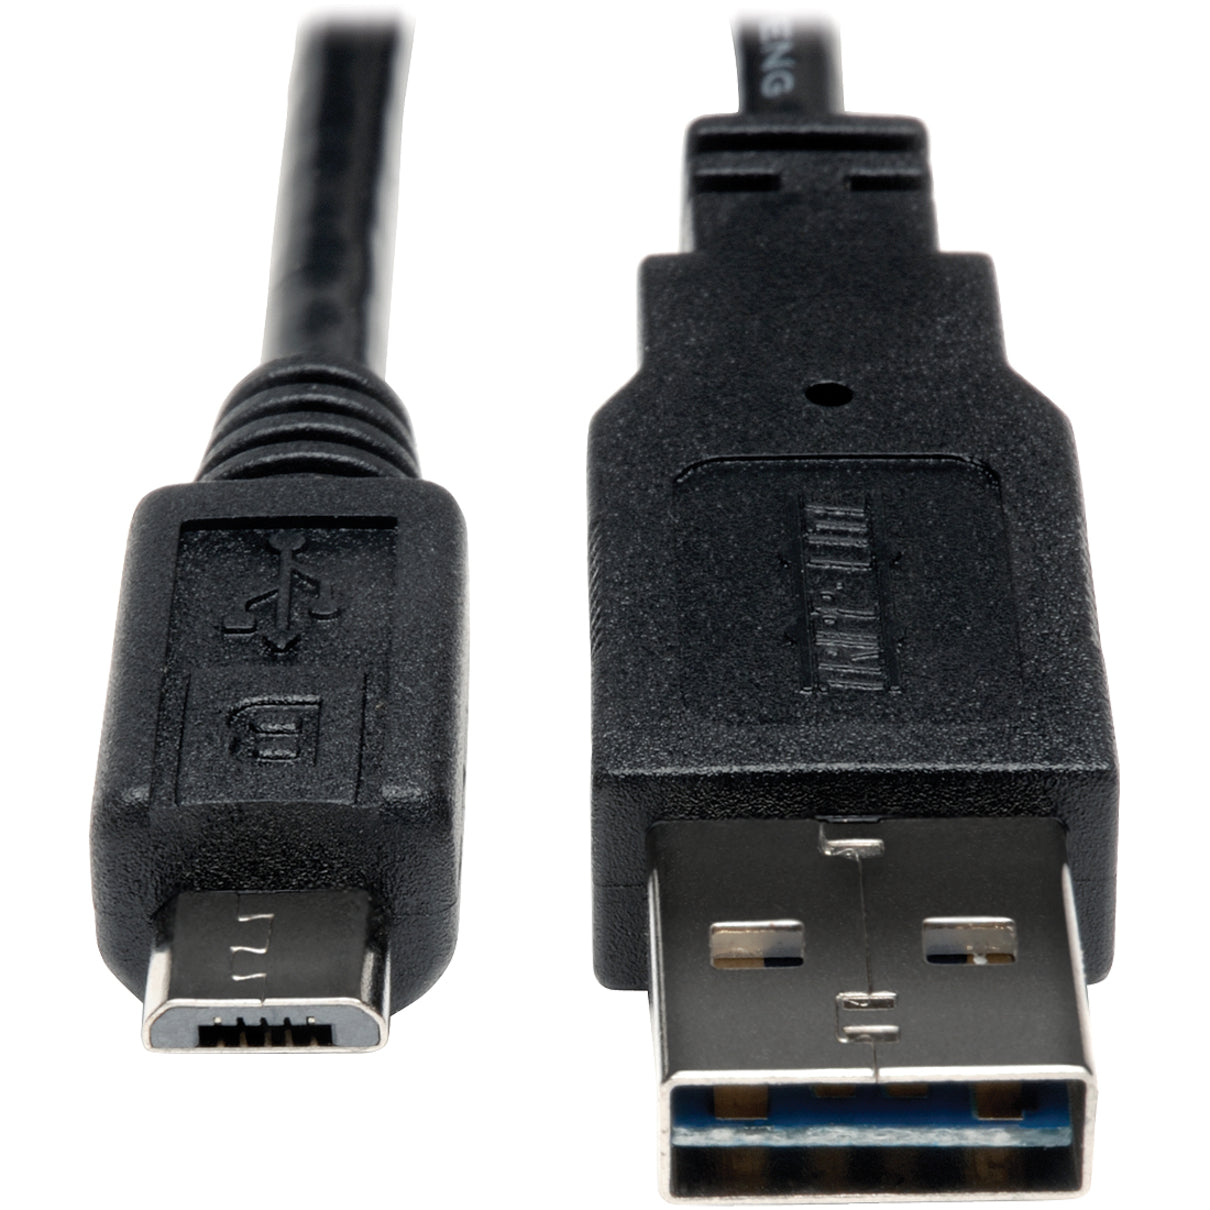 Tripp Lite UR050-003 USB Data Transfer Cable, 3 ft, Reversible, Copper Conductor, Black